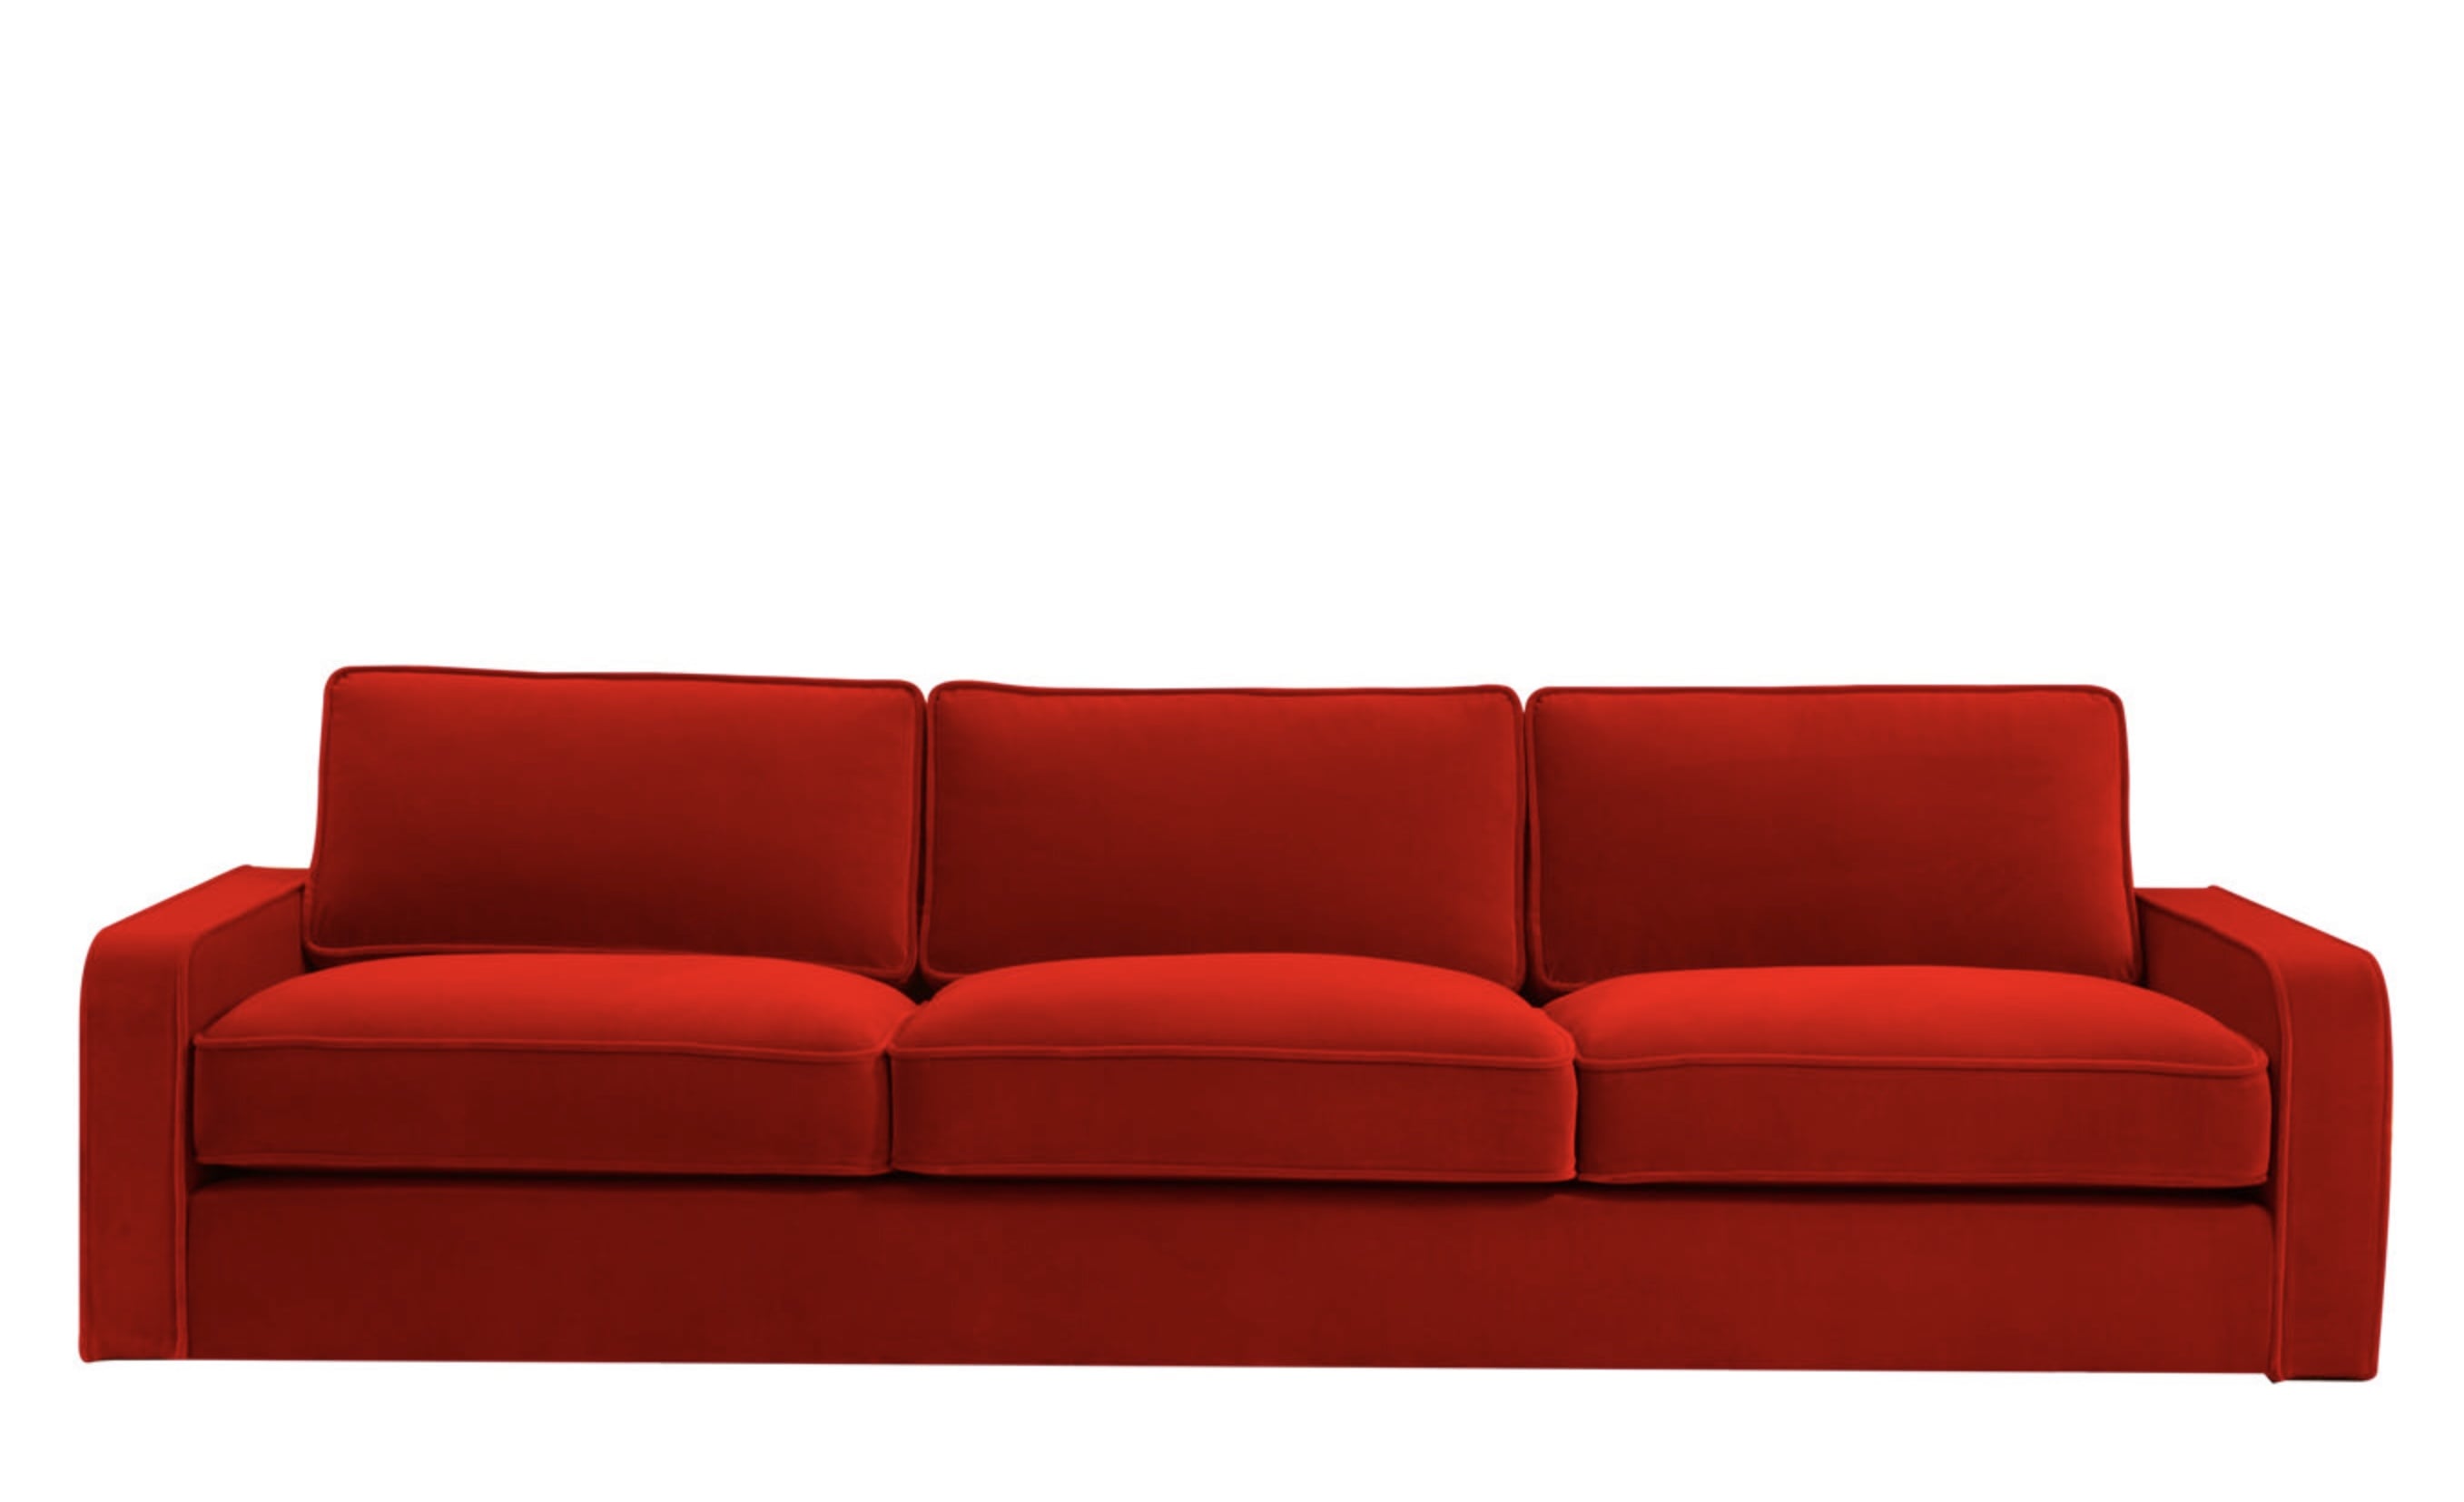 Made to Order Furniture. - Sofa 058-01